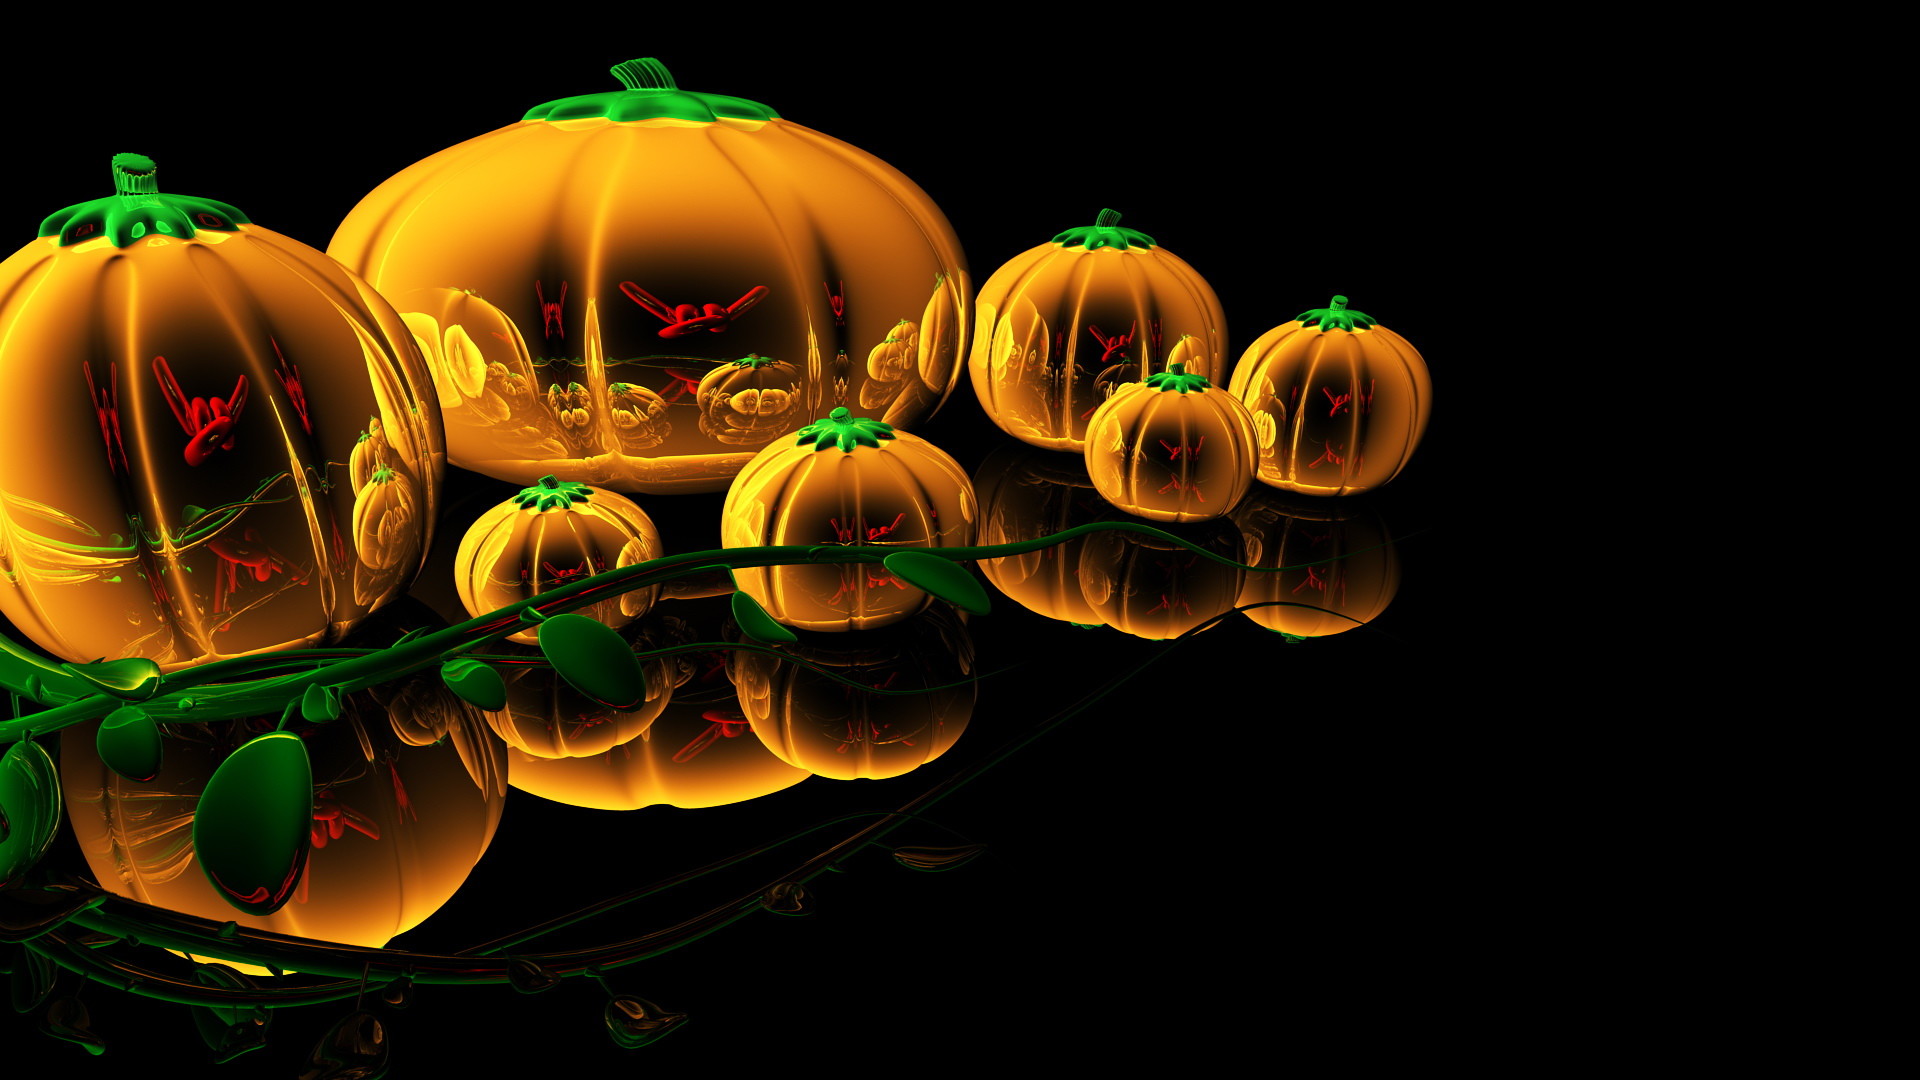 1920x1080 Free Halloween 3D Desktop Wallpaper - WallpaperSafari. Free Halloween 3D Desktop  Wallpaper WallpaperSafari